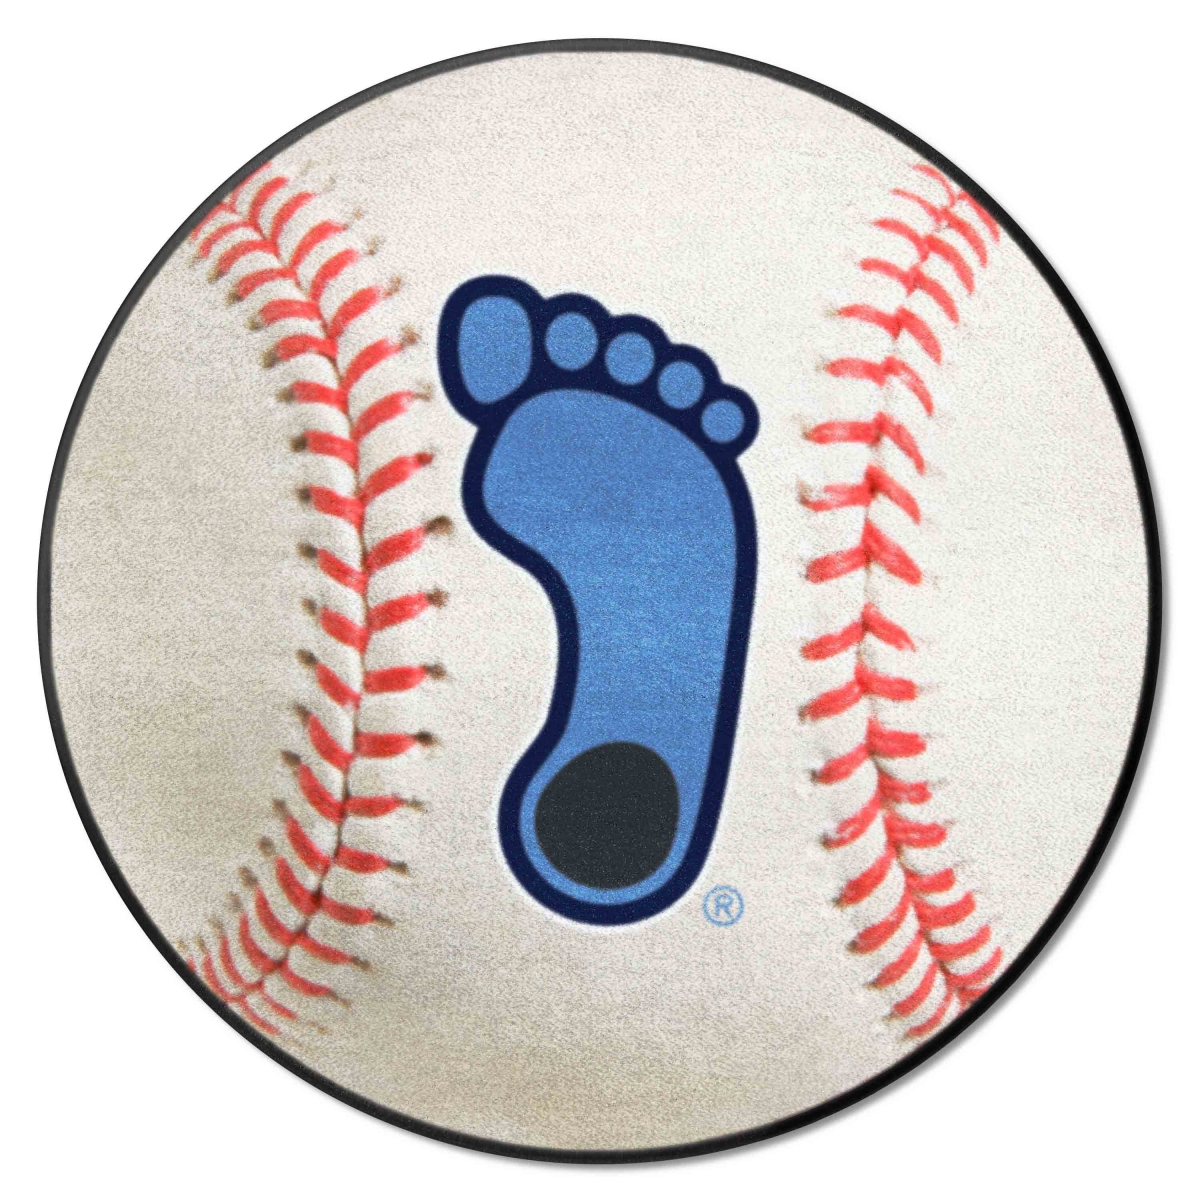 Fanmats 5007 27 in. Dia. North Carolina Tar Heels Baseball Rug - Tar Heel Logo&#44; White